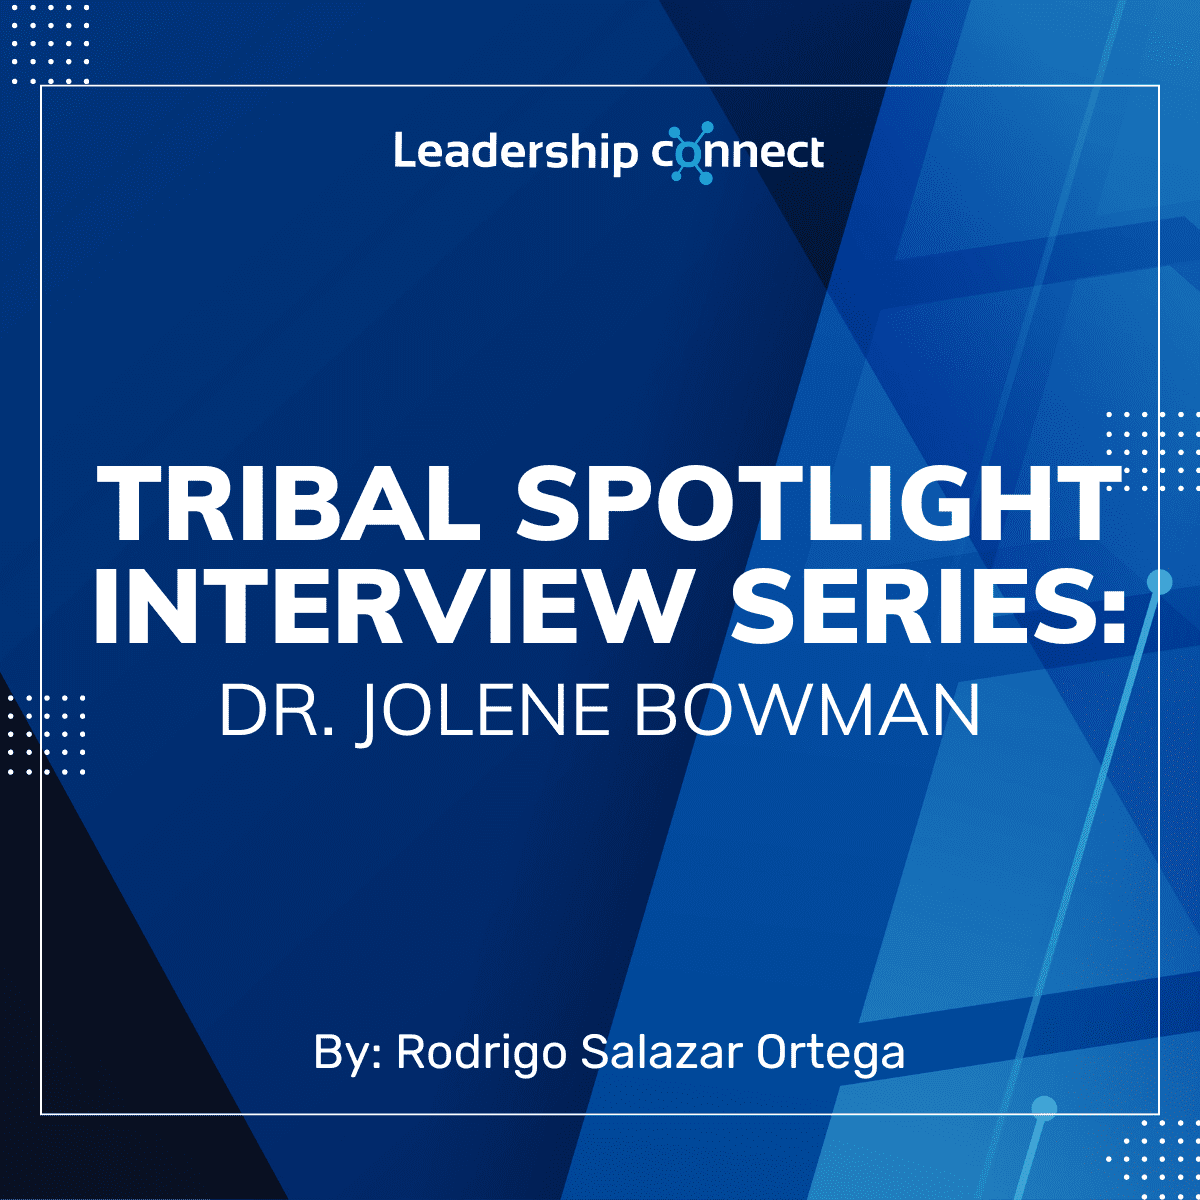 Tribal Spotlight Interview Series with Dr. Jolene Bowman